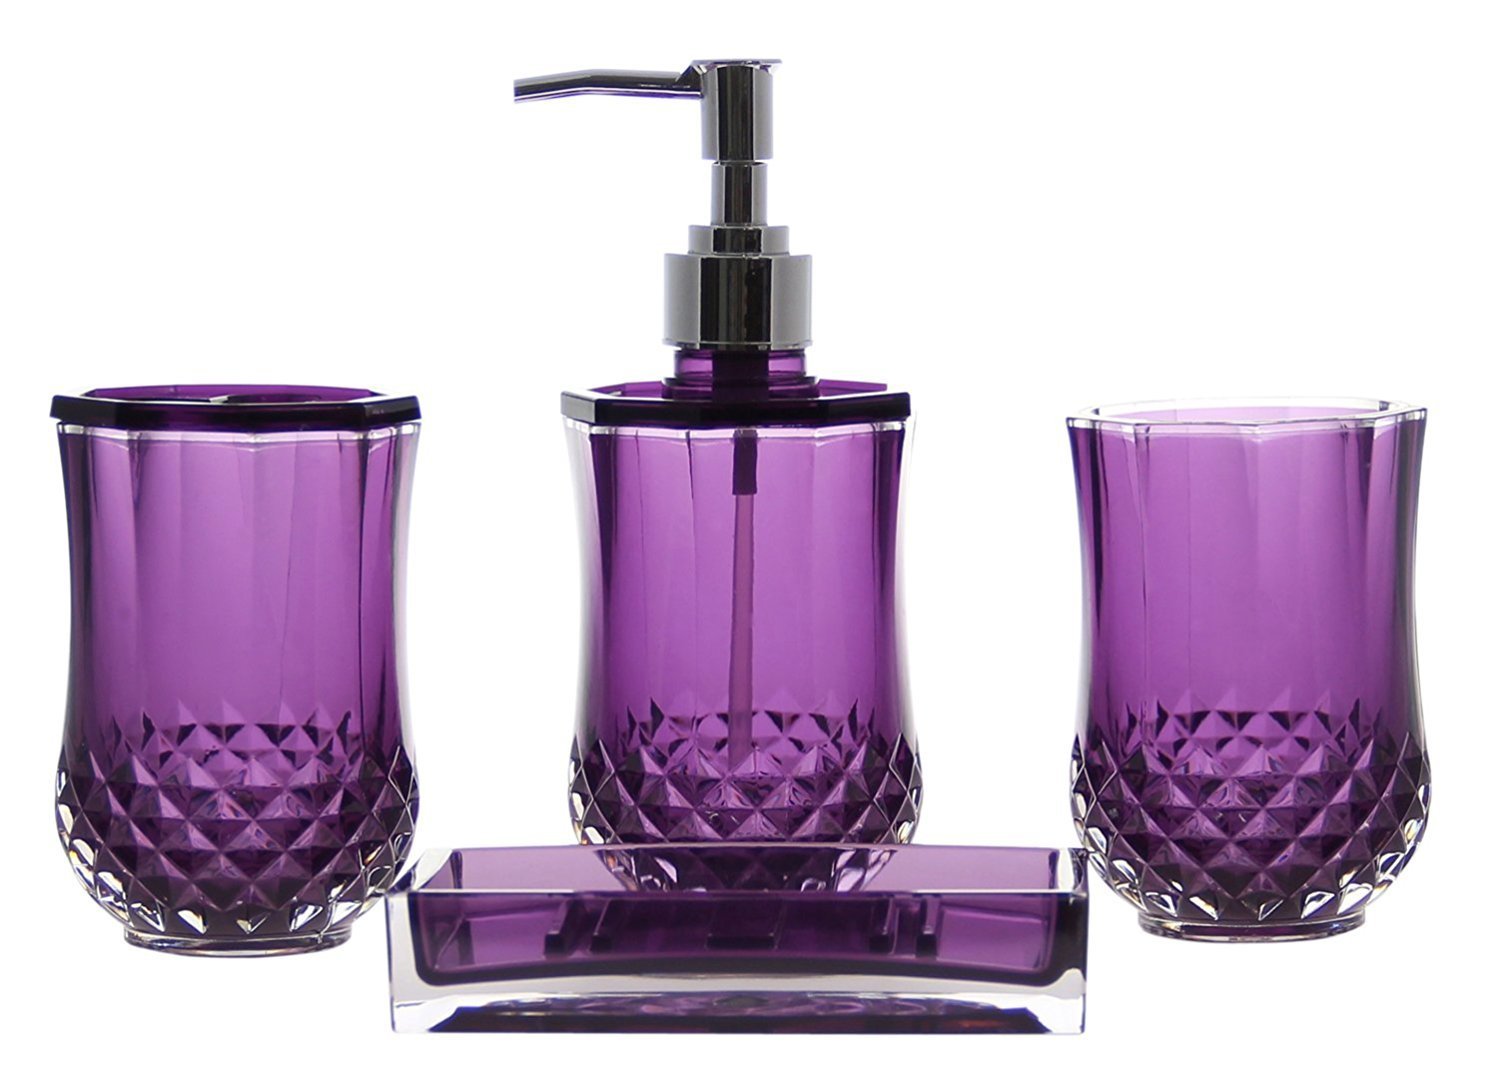 Purple Bathroom Accessories Sets Design | Cool Ideas for Home